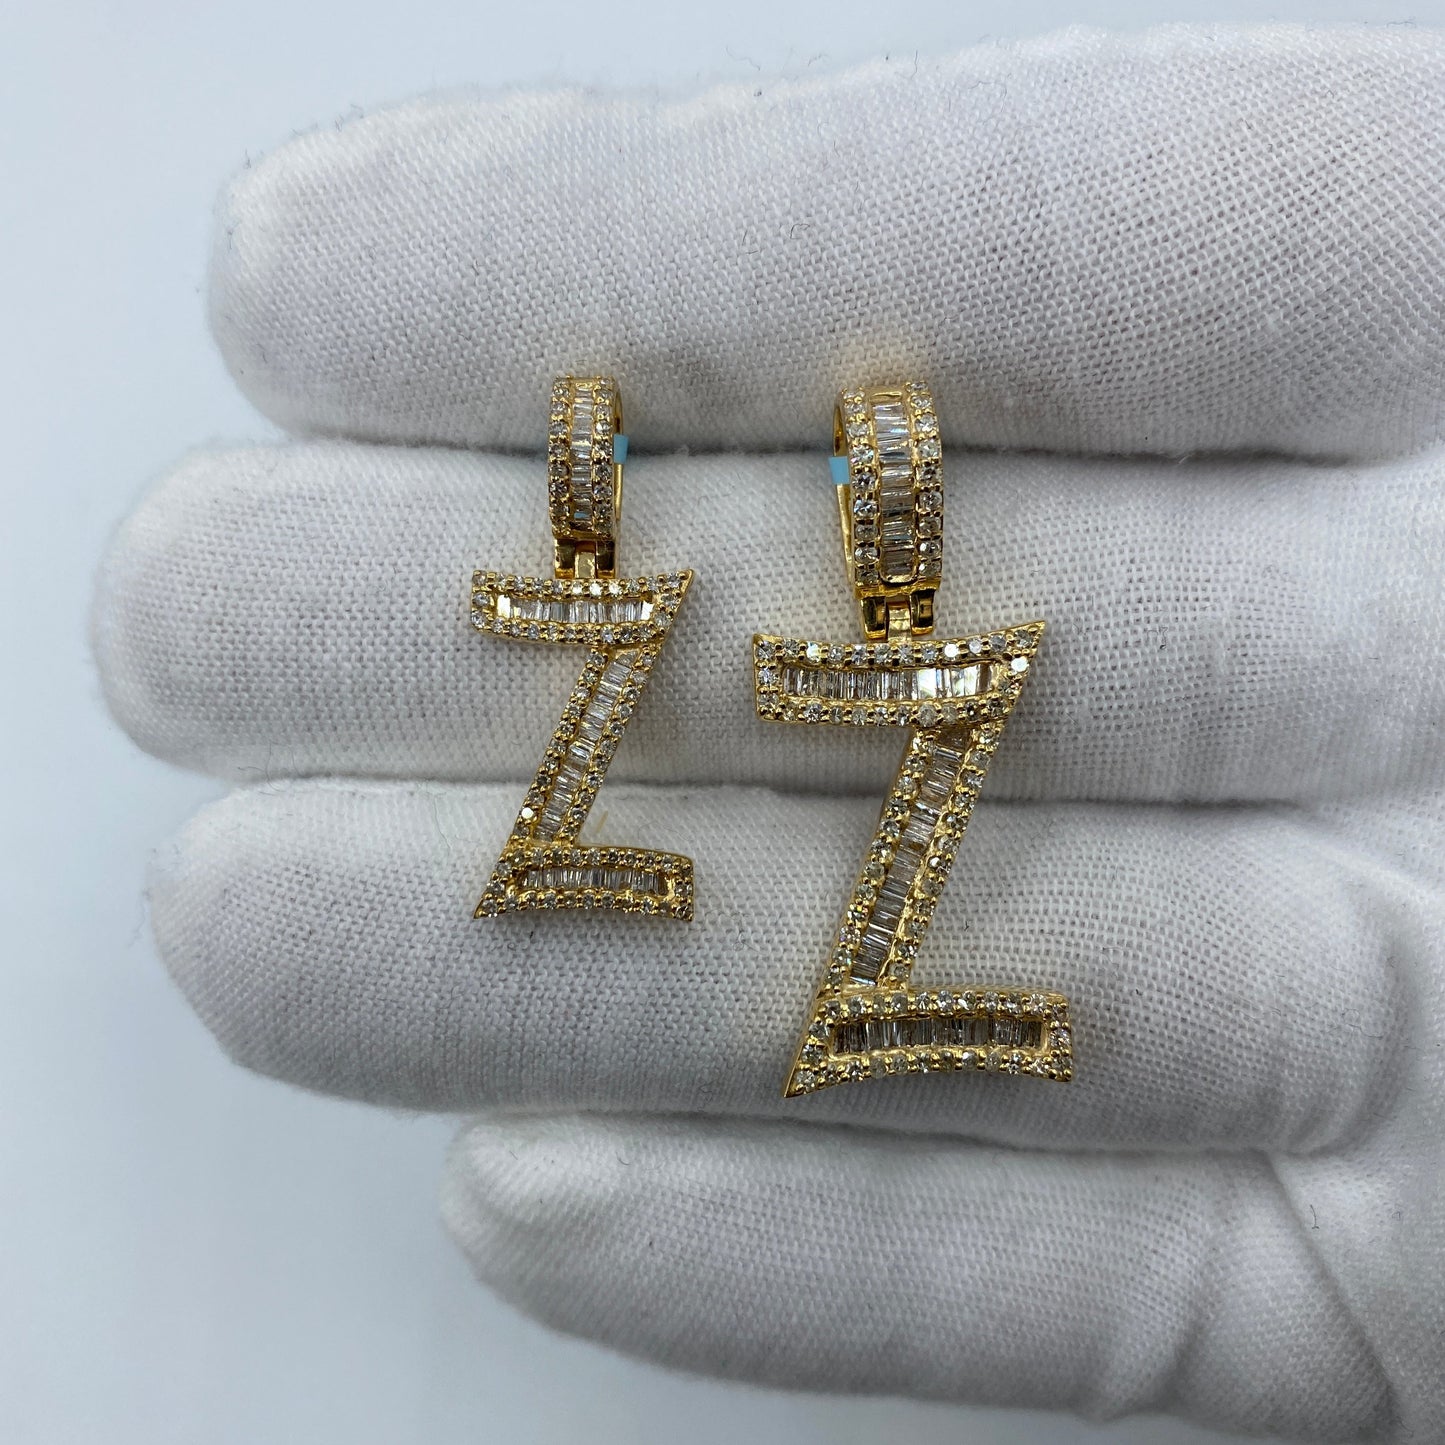 14K Bamboo Initial Letter Diamond Baguette Pendants Full Collection